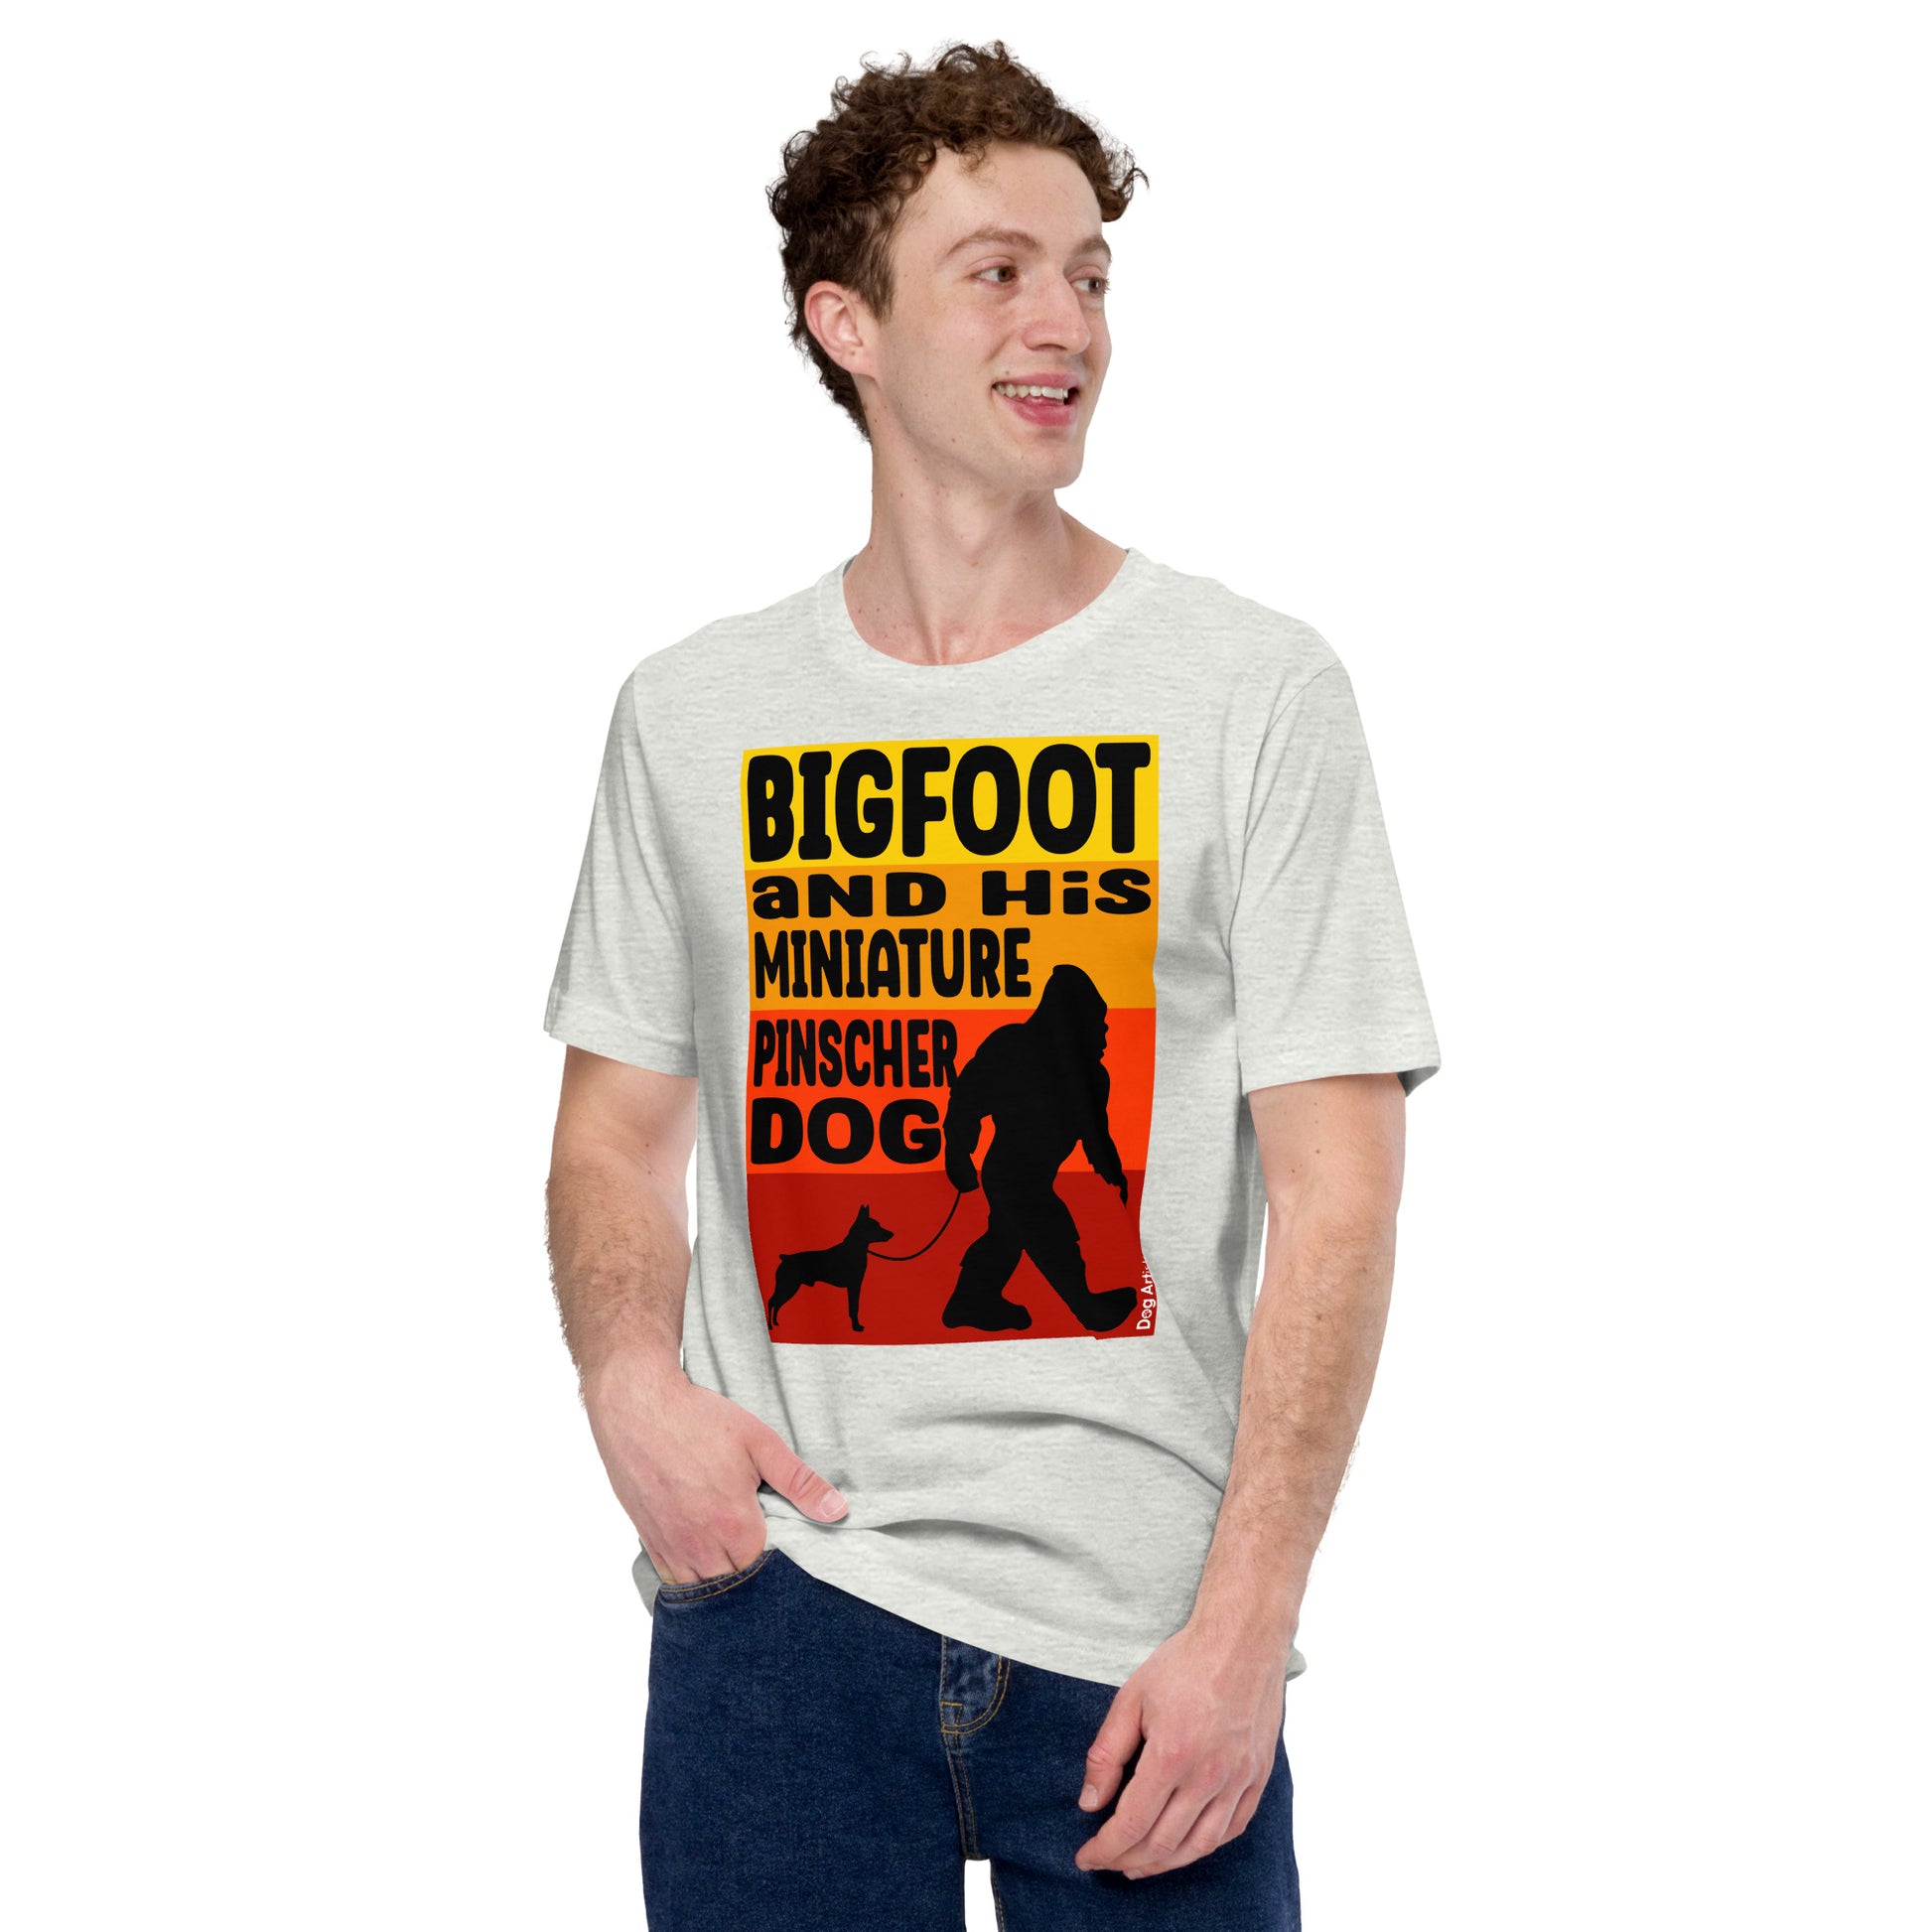 Bigfoot and his Miniature Pinscher unisex ash t-shirt by Dog Artistry.